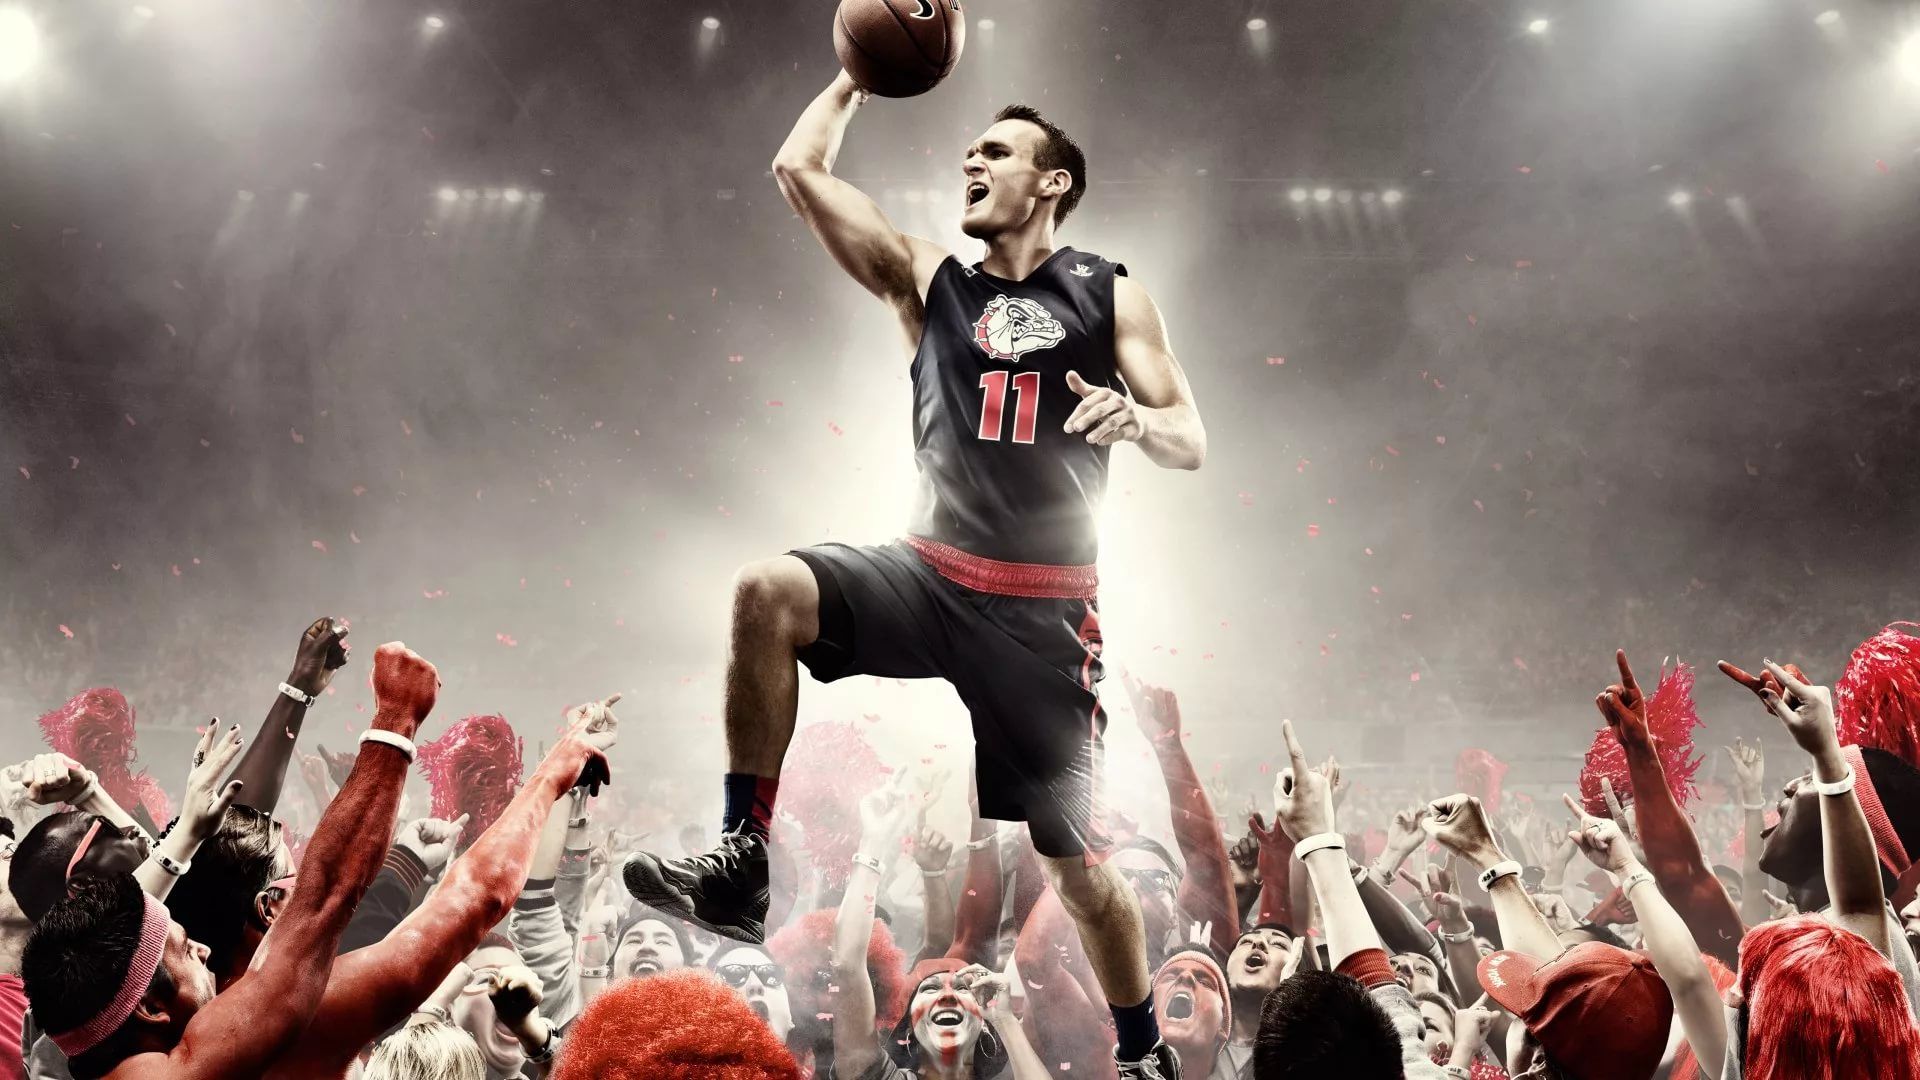 Nike Basketball screen wallpaper